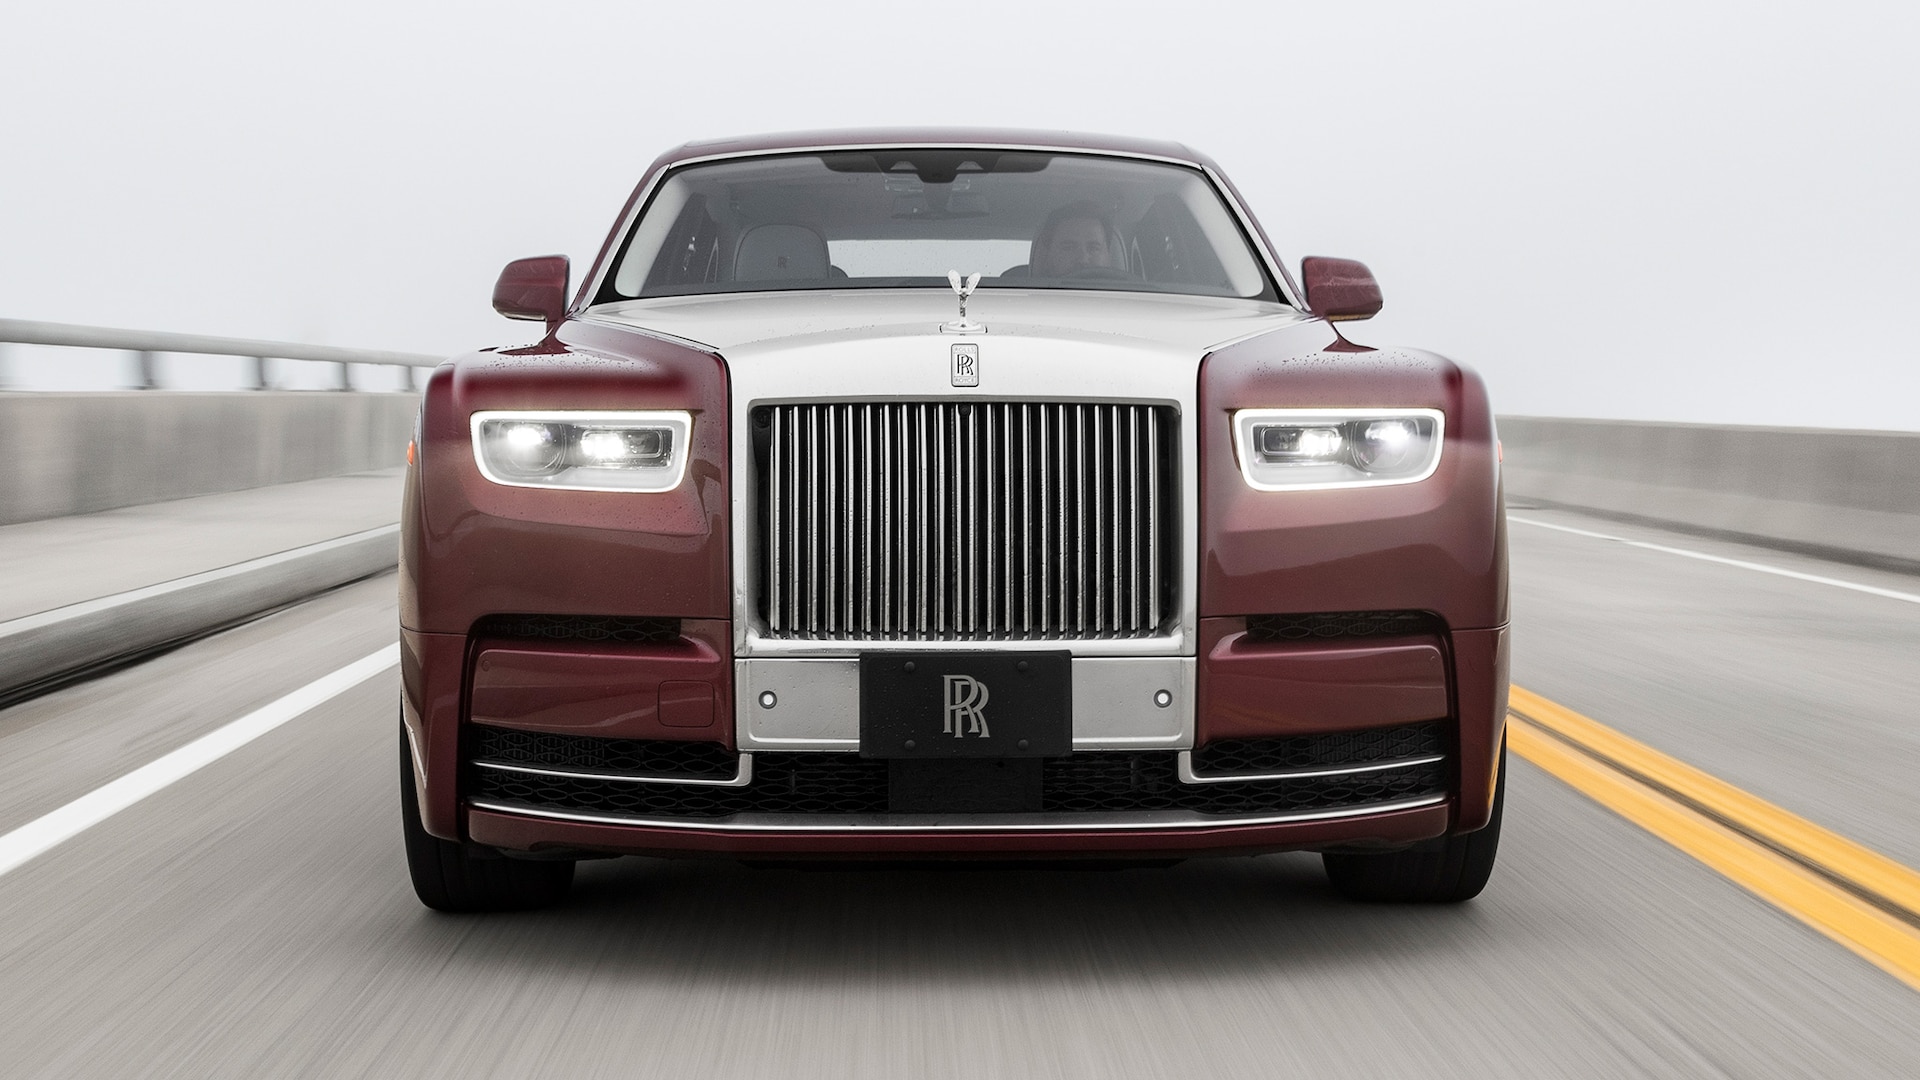 2019 Rolls-Royce Phantom VIII Drive: Not Just a Chauffeur Car